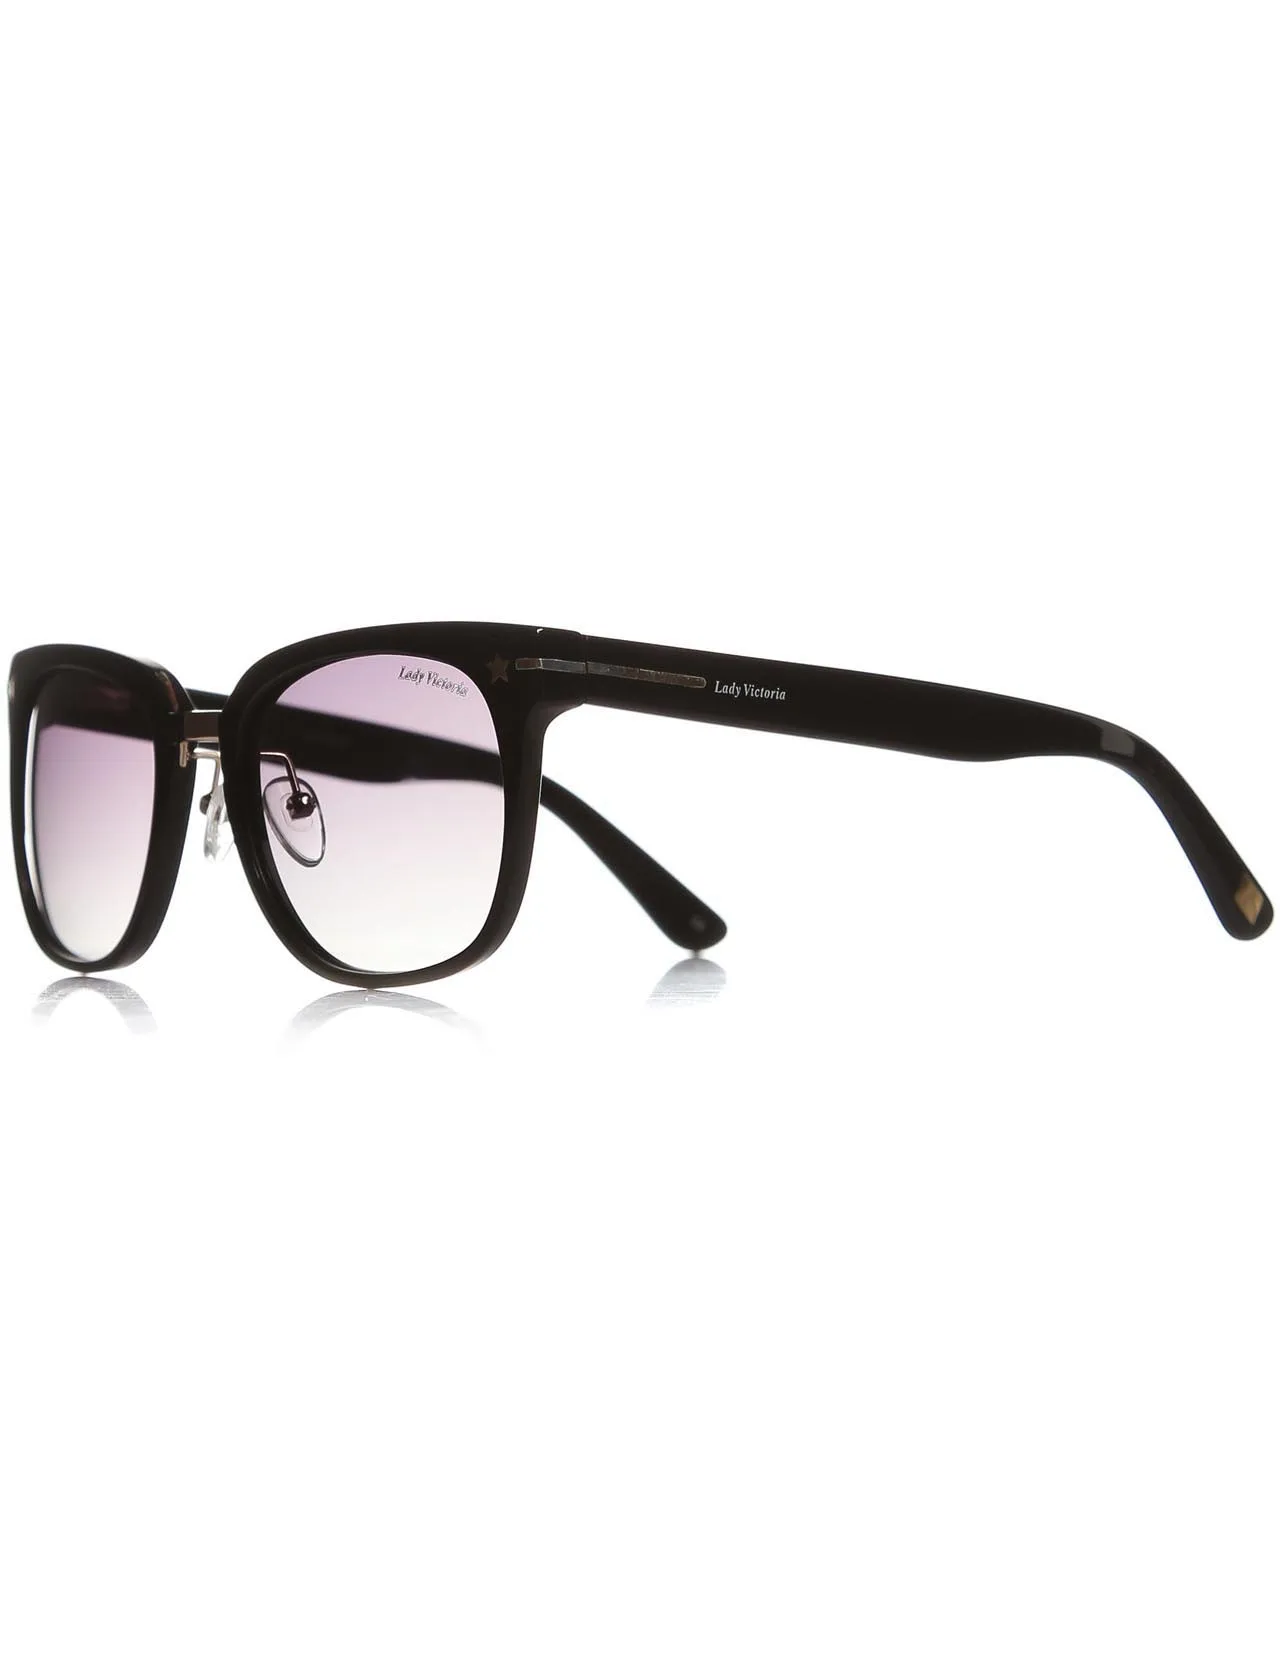 

Unisex sunglasses ldy 7013 01 bone black organic rectangle rectangular 53-20-140 lady victoria